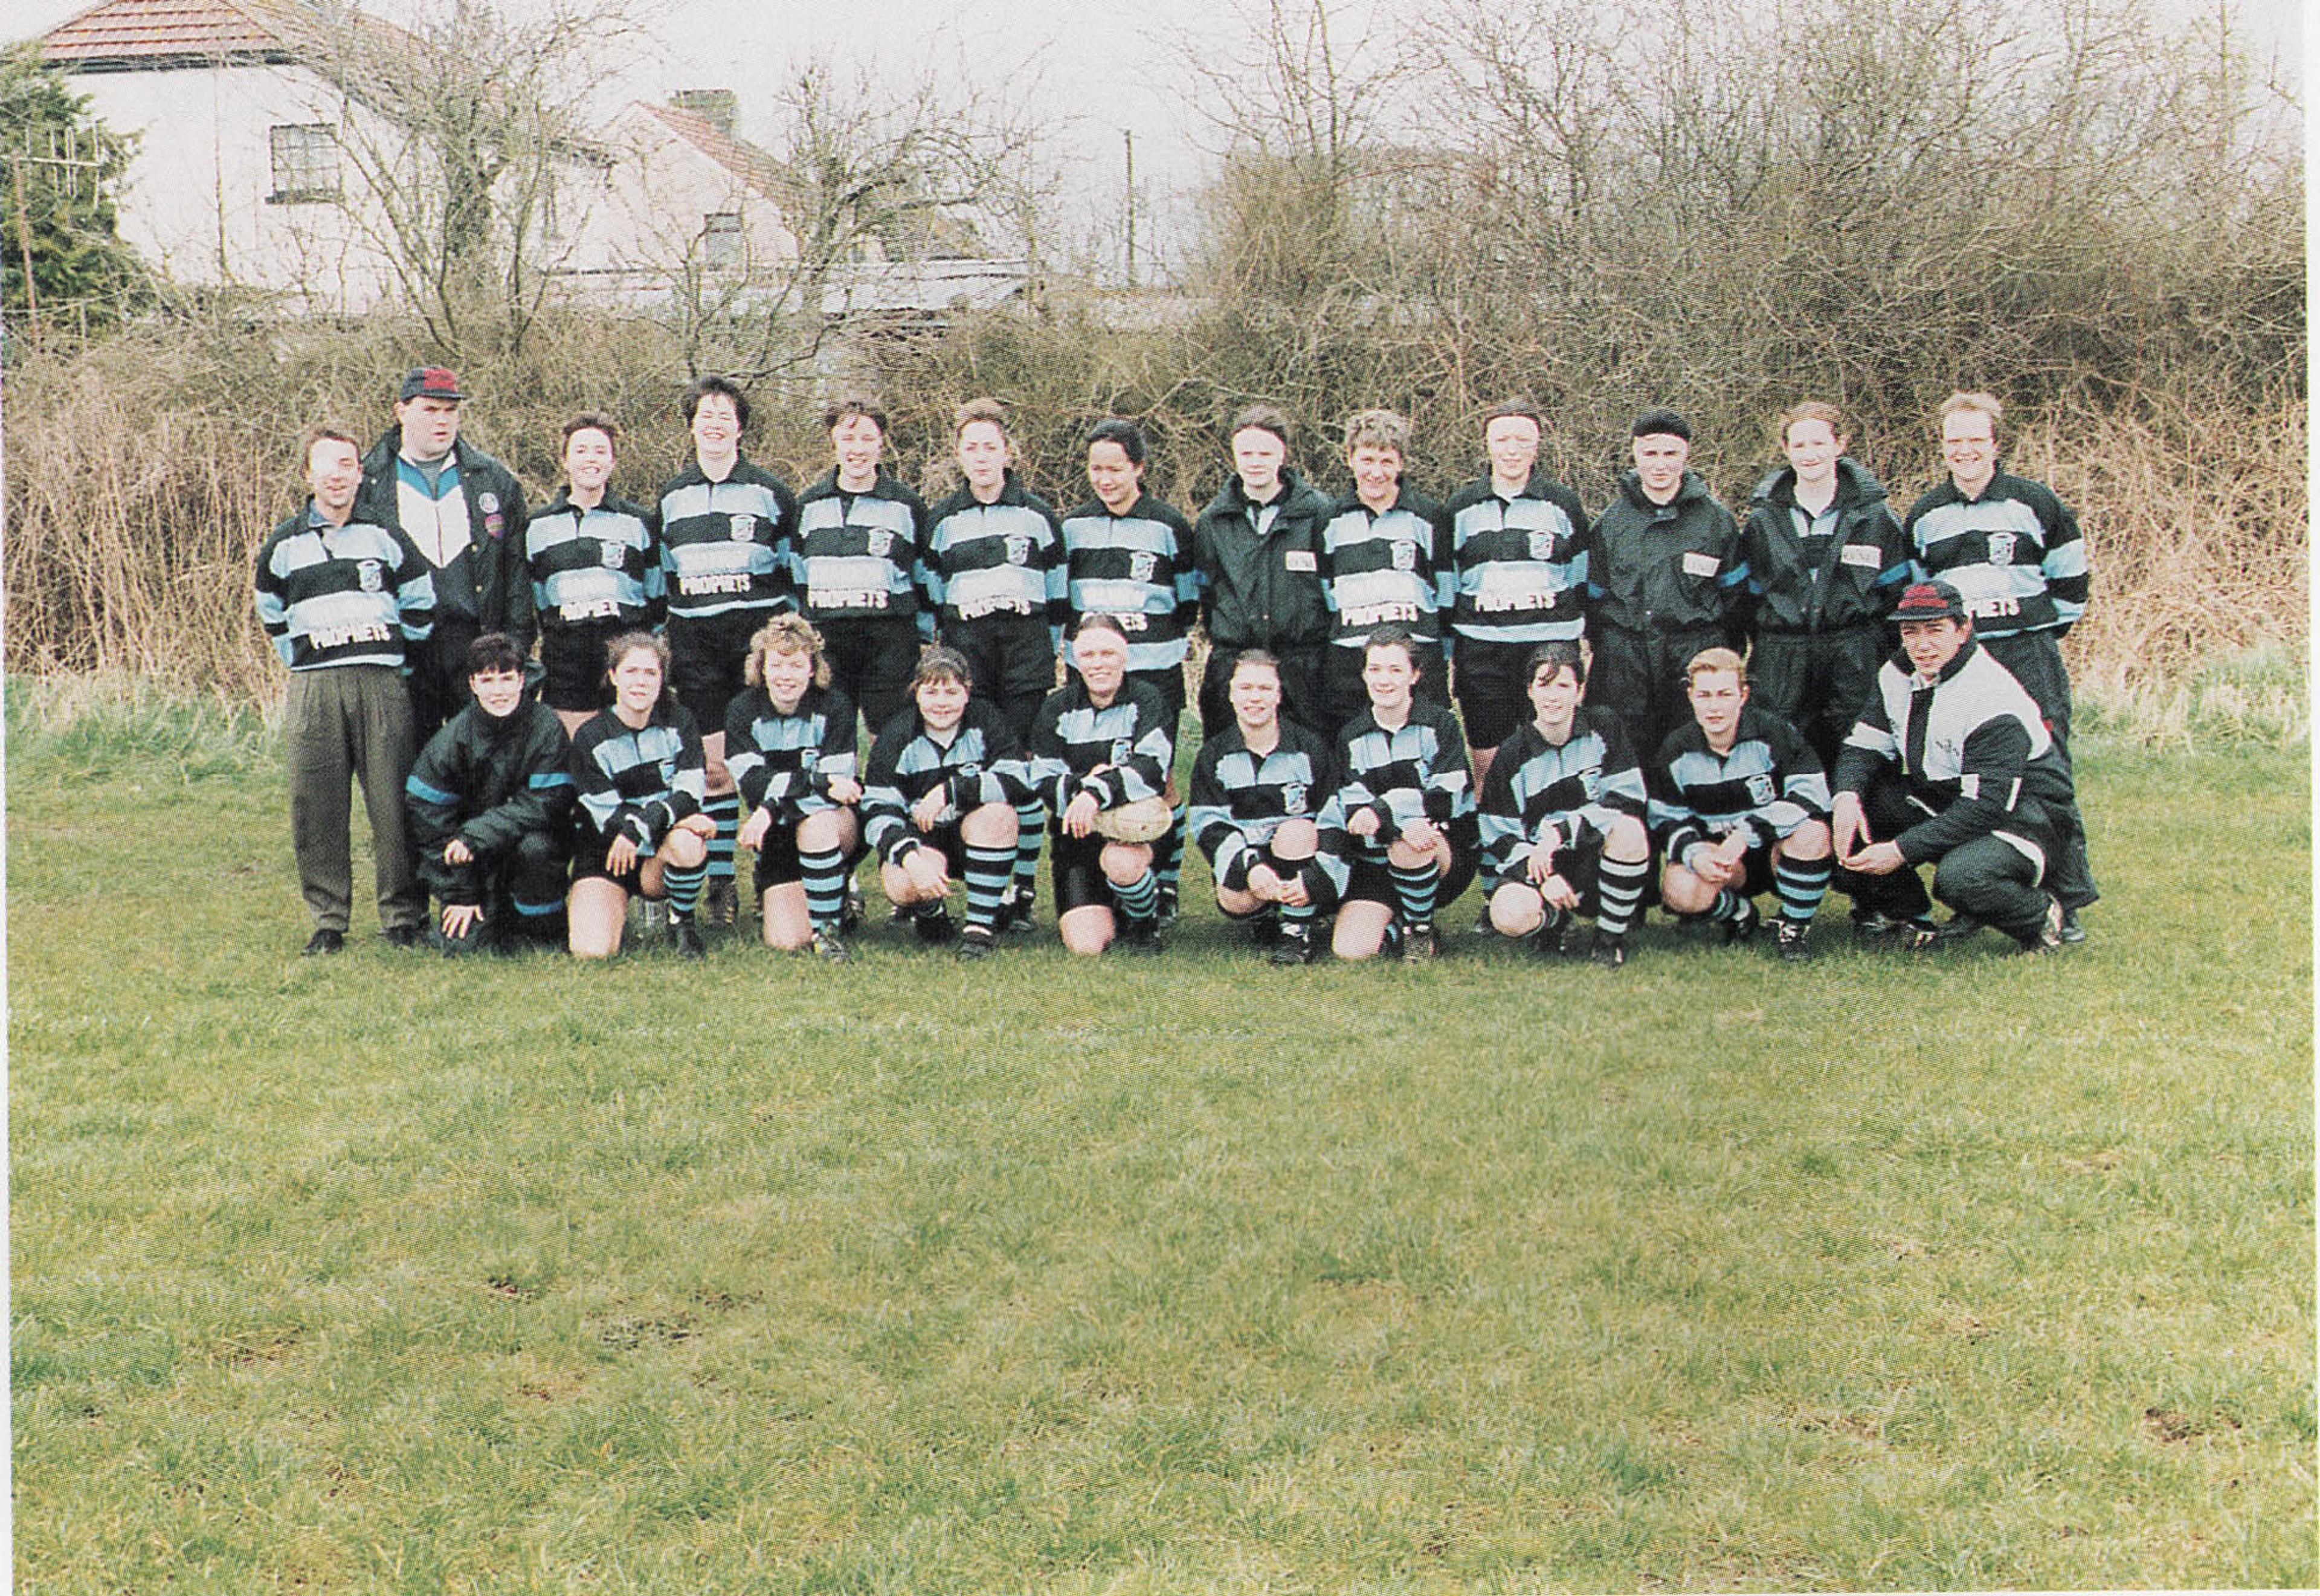 (1994) Marcel Biefer & Beat Zgraggen, The Game Must Go On, Rugby Match, Shannon Prophets versus Old Crescent Ladies Team. 